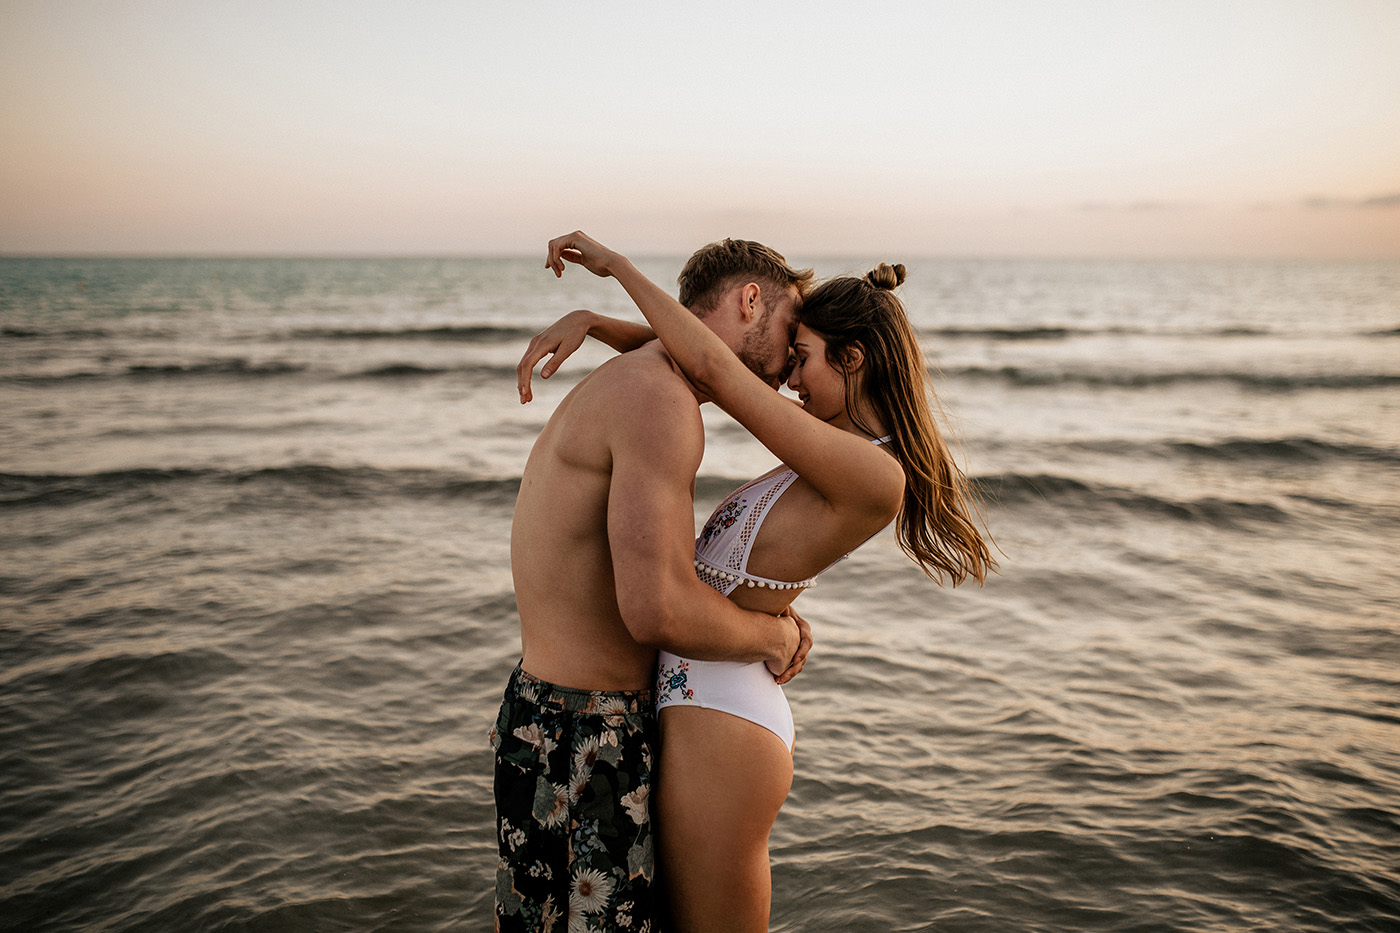 Beach Couple Shoot - Lovestory at the Beach of Balearic Islands - Mallorca,...